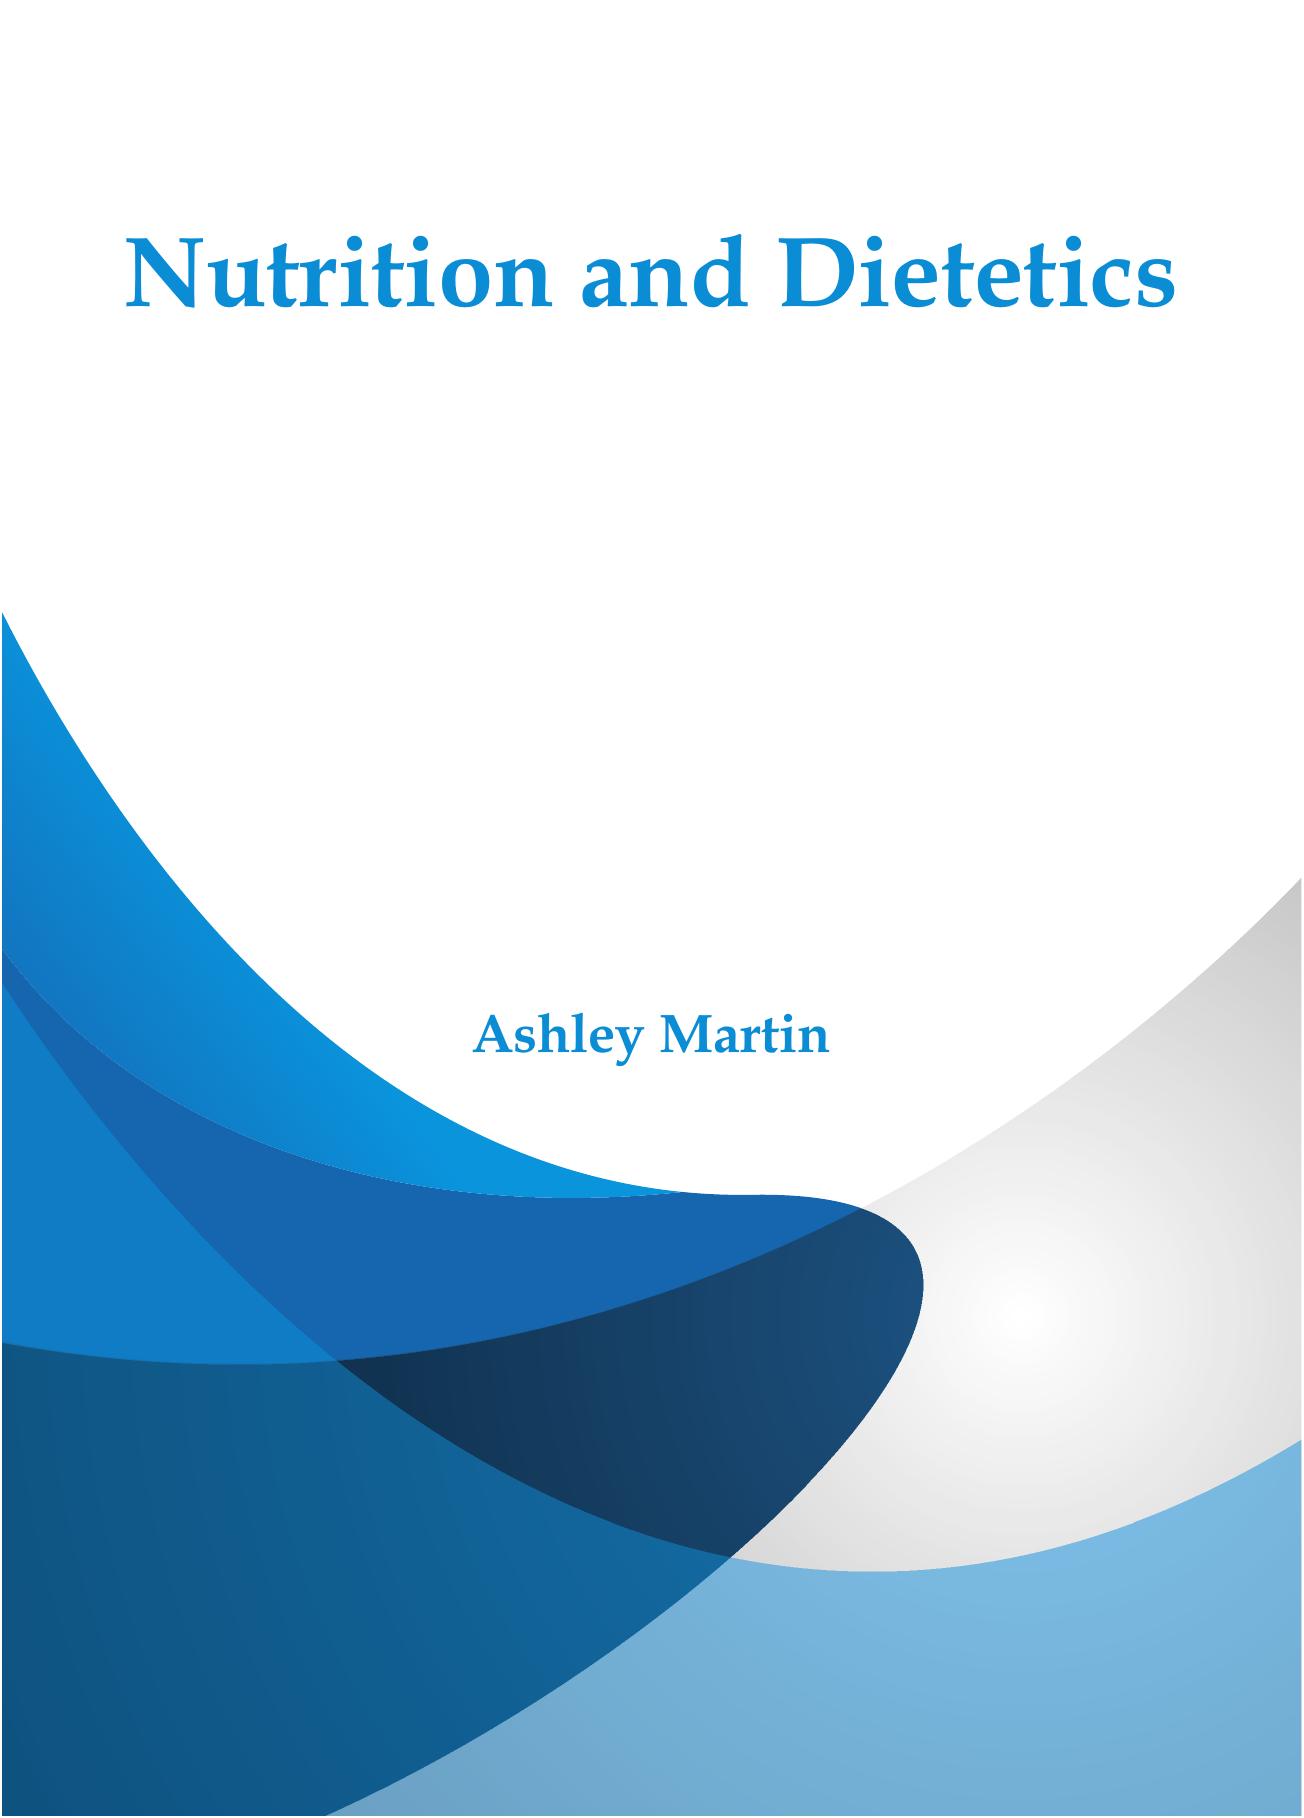 Nutrition and Dietetics 2017